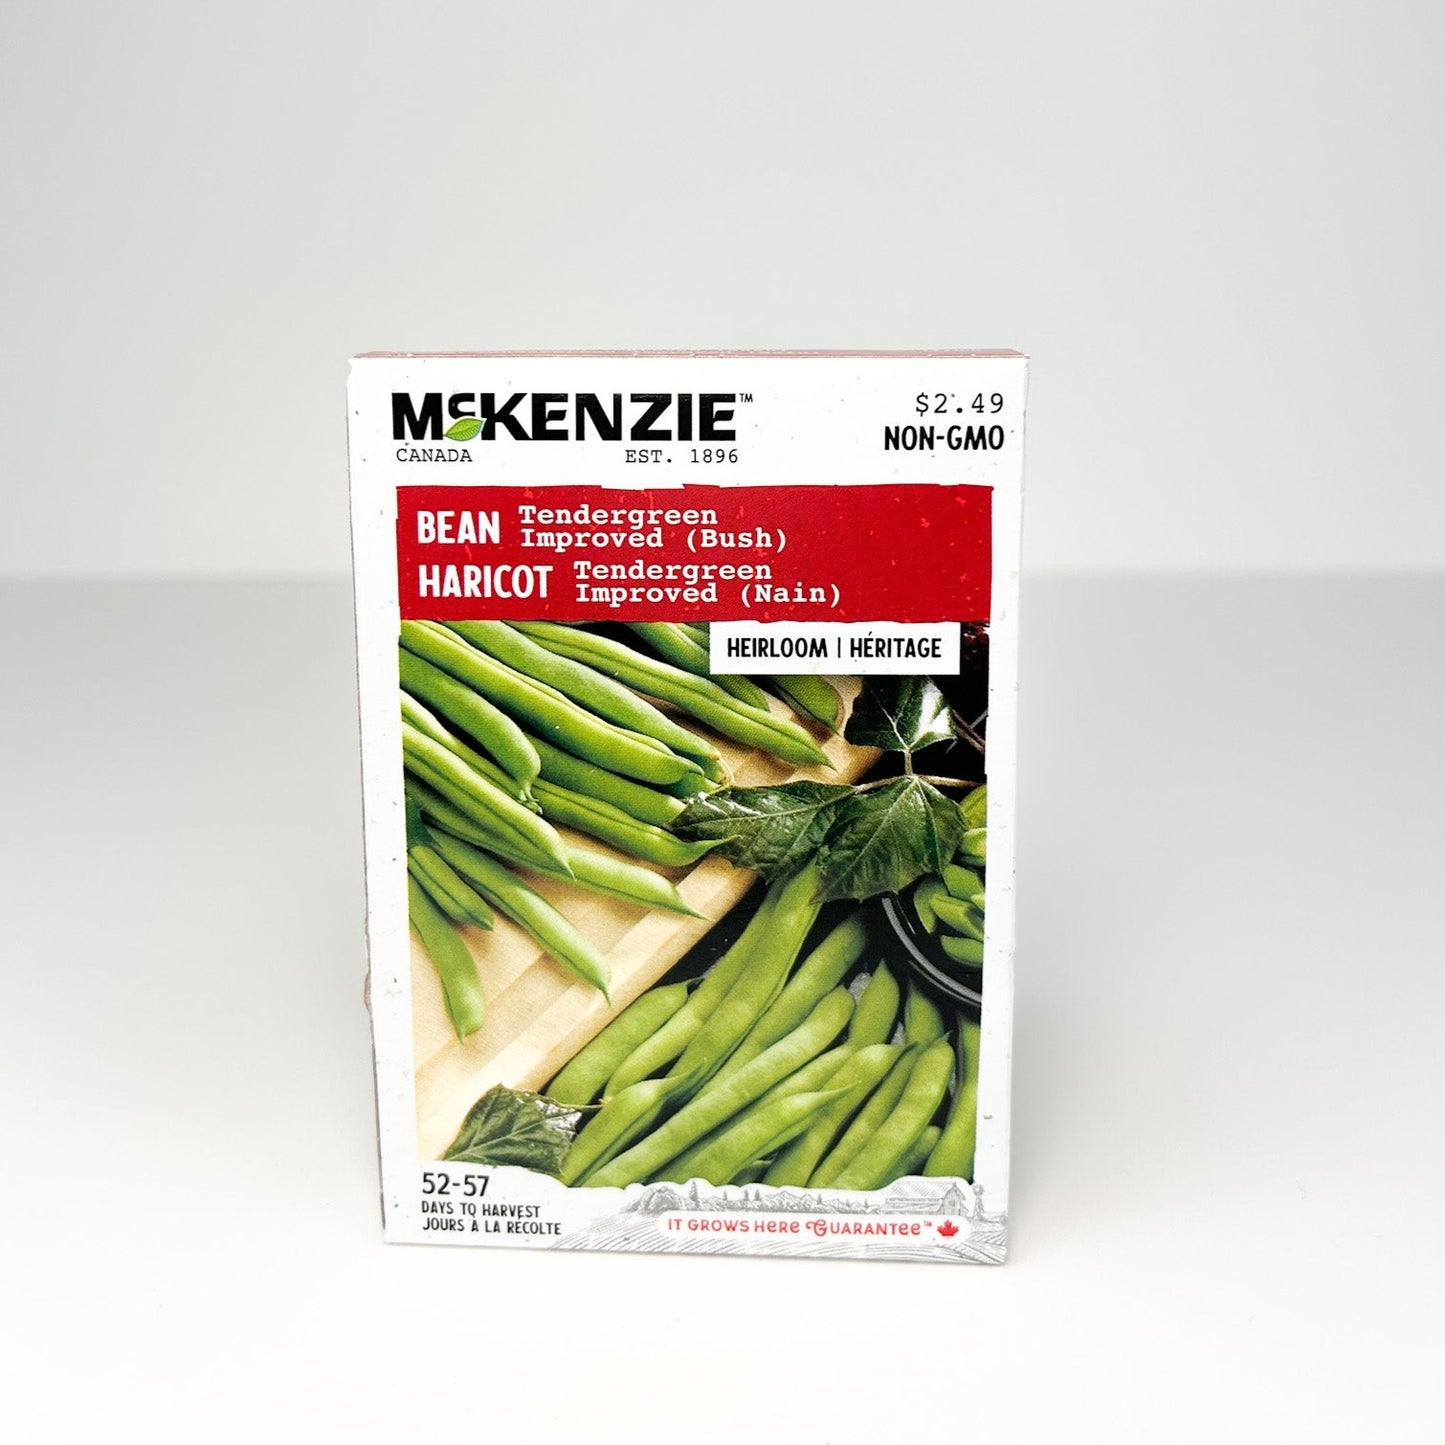 Bean Tendergreen Improved Seeds